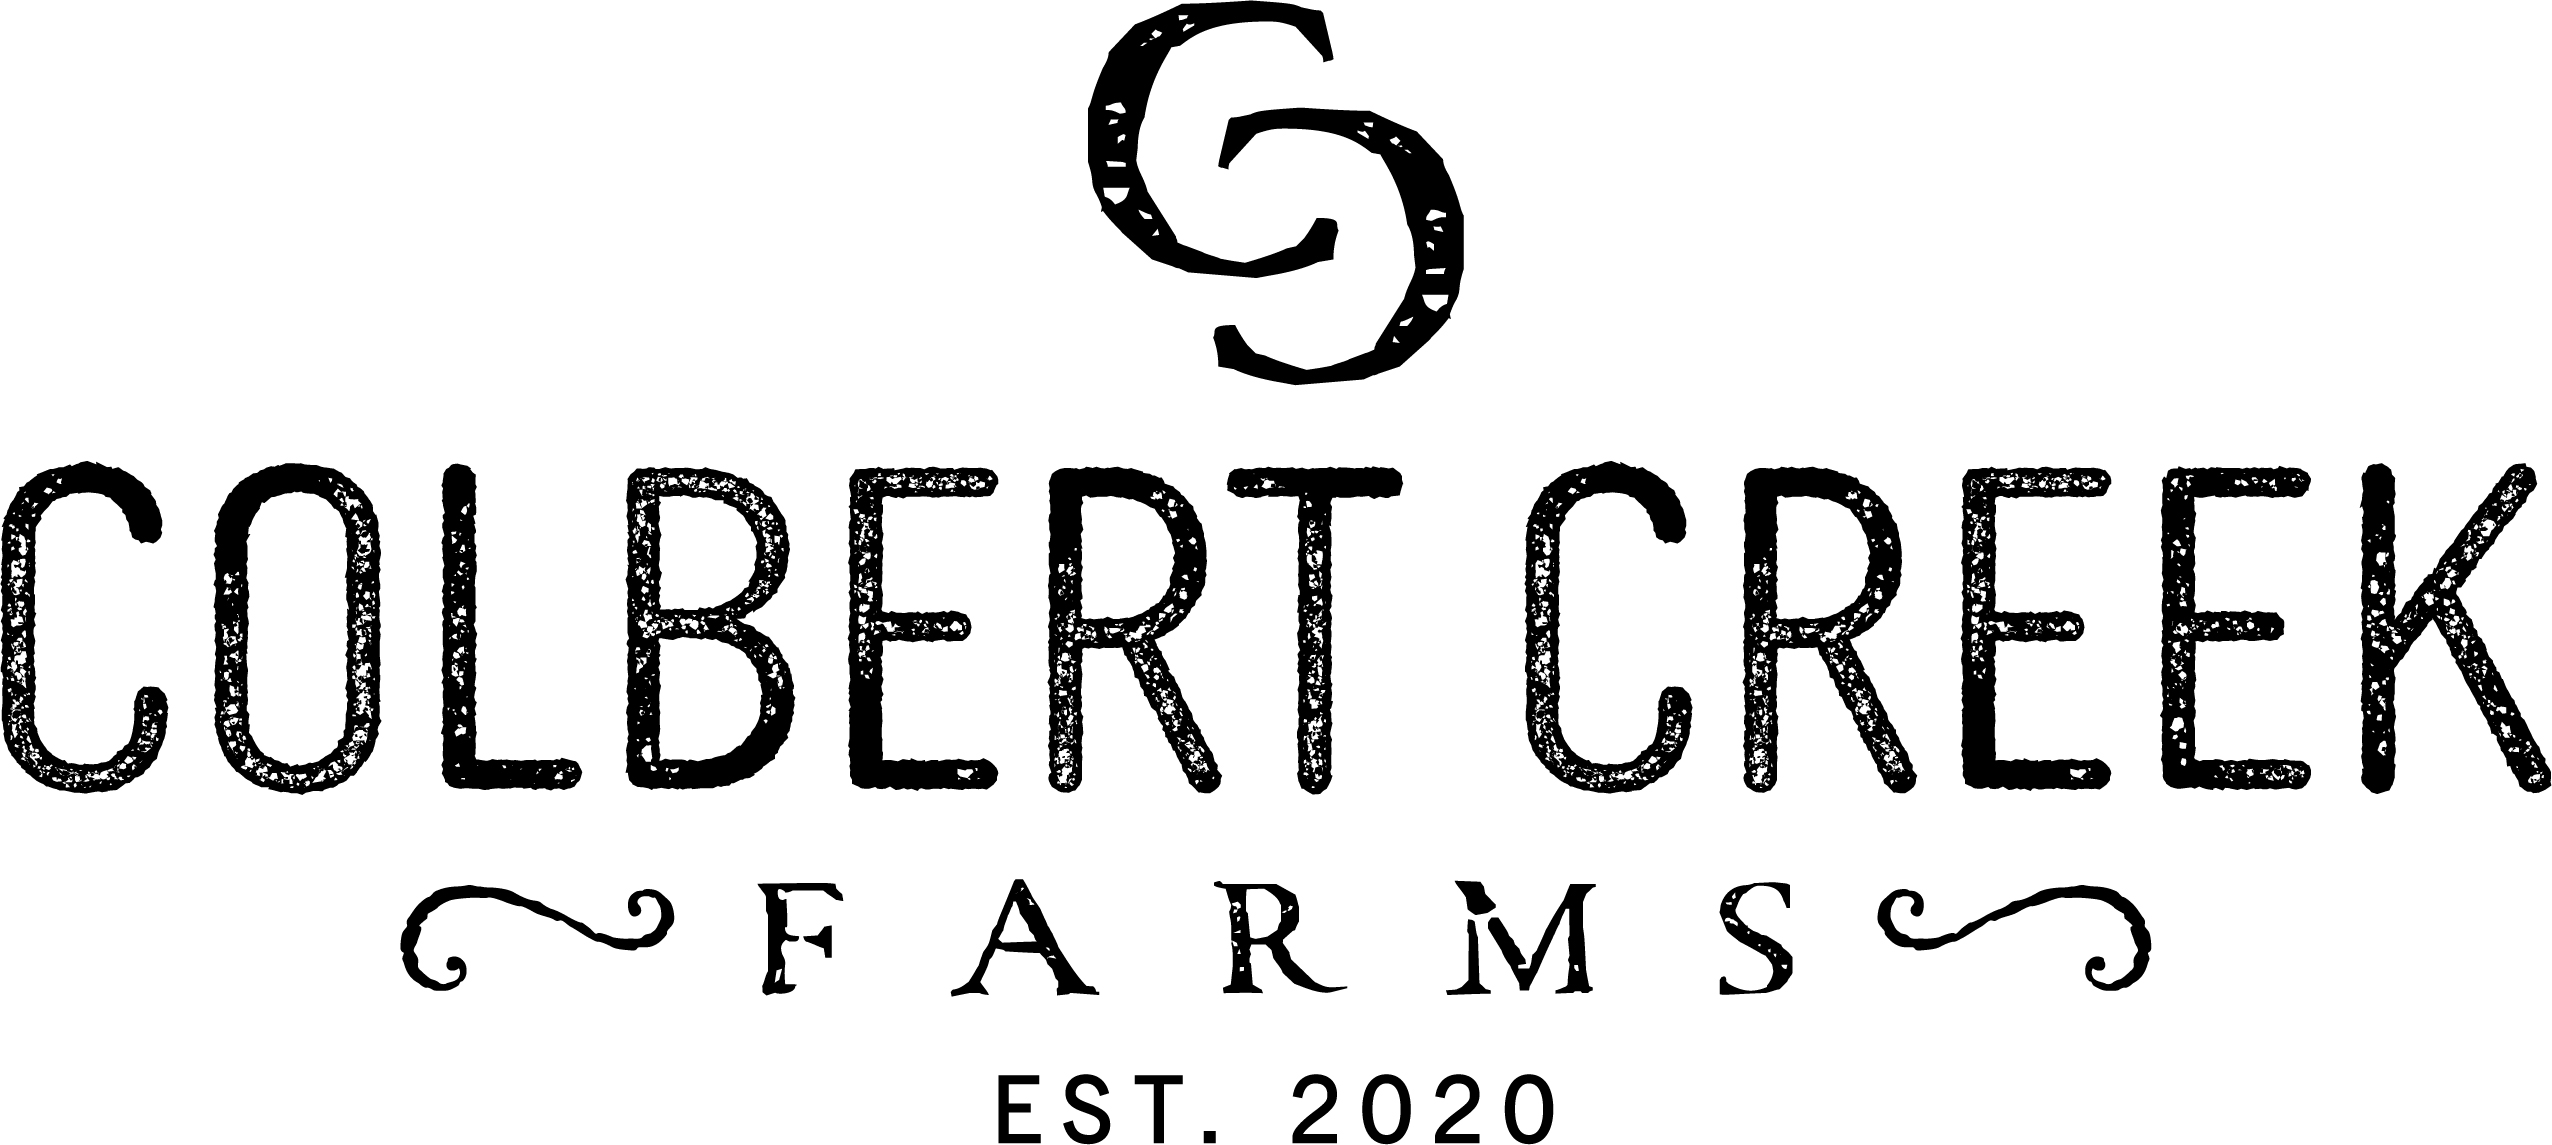 Colbert Creek Farms logo 